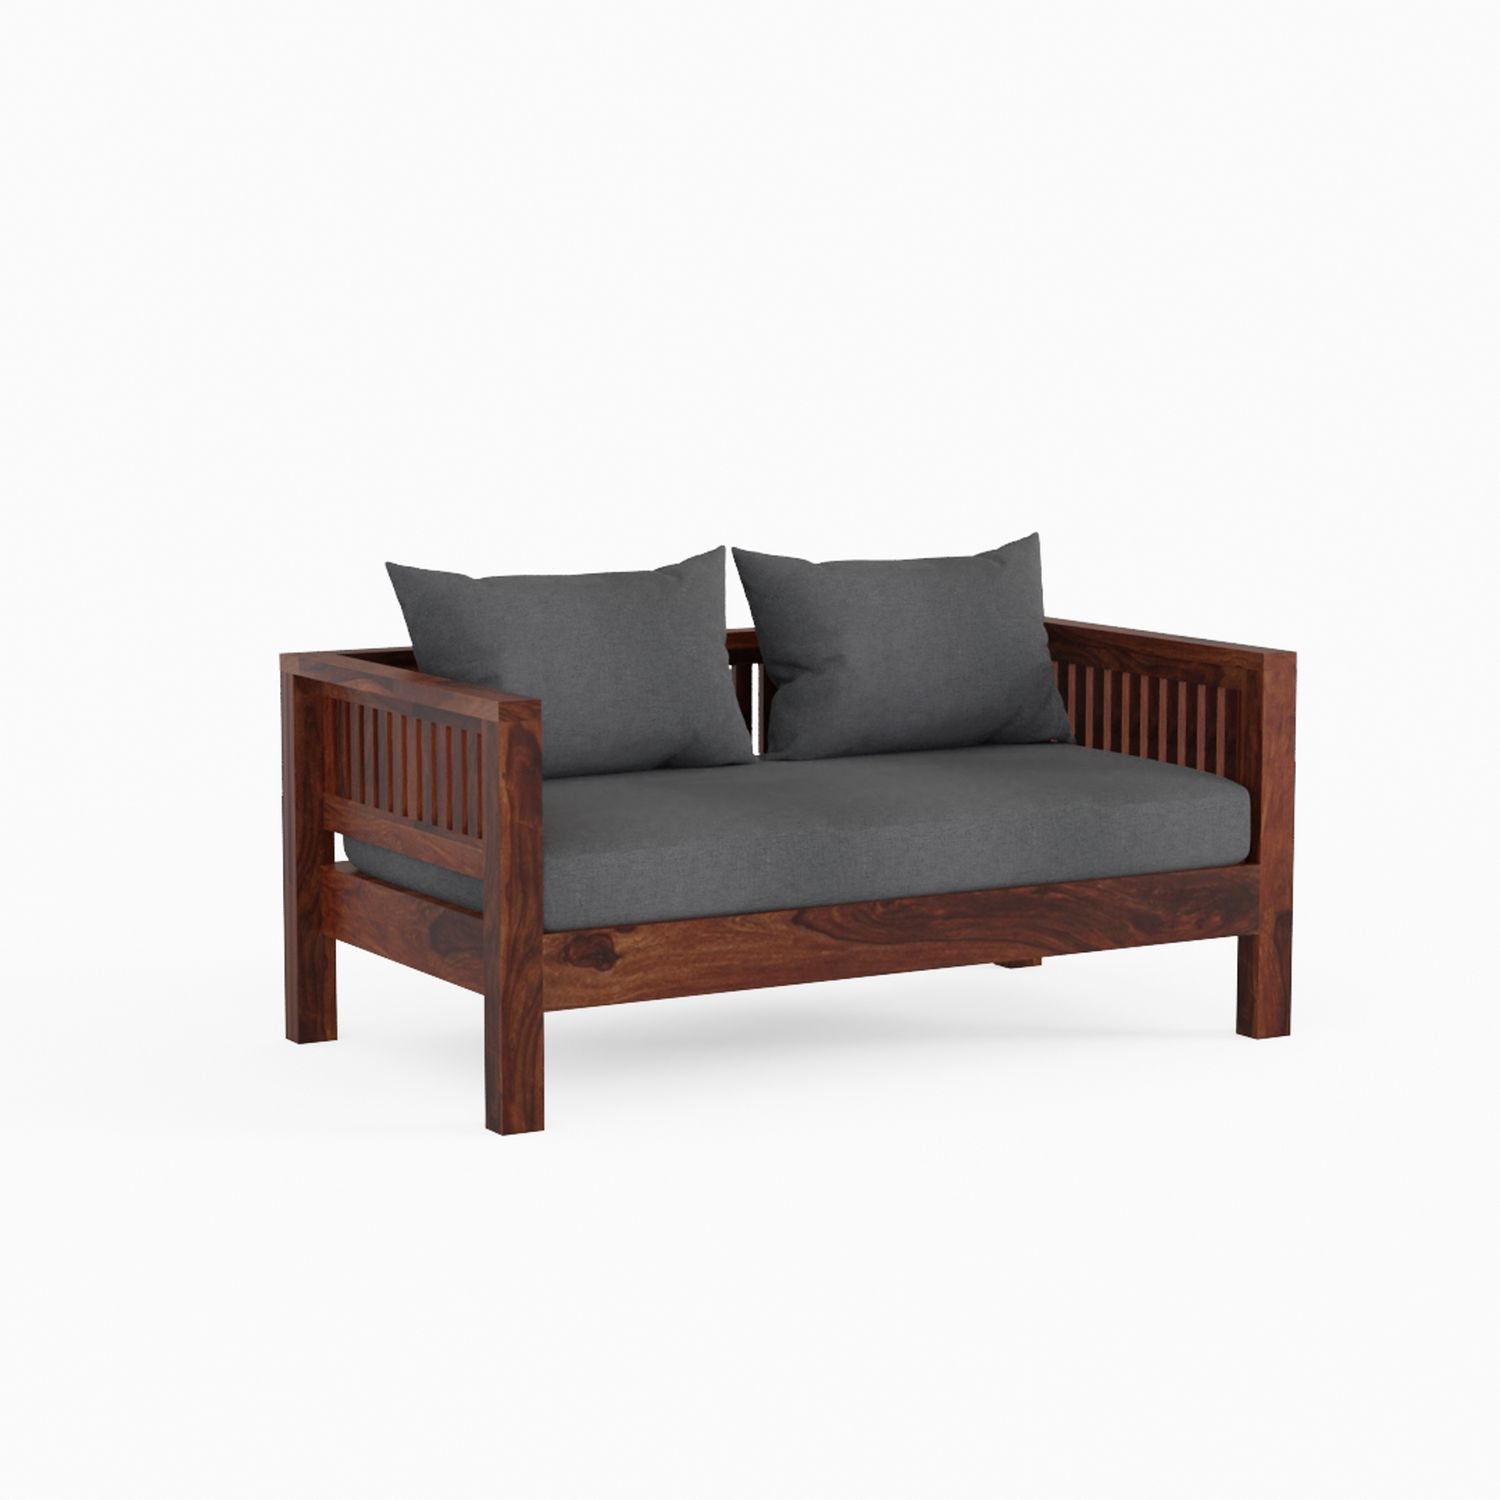 Essen Solid Sheesham Wood 2 Seater Sofa (Natural Finish)